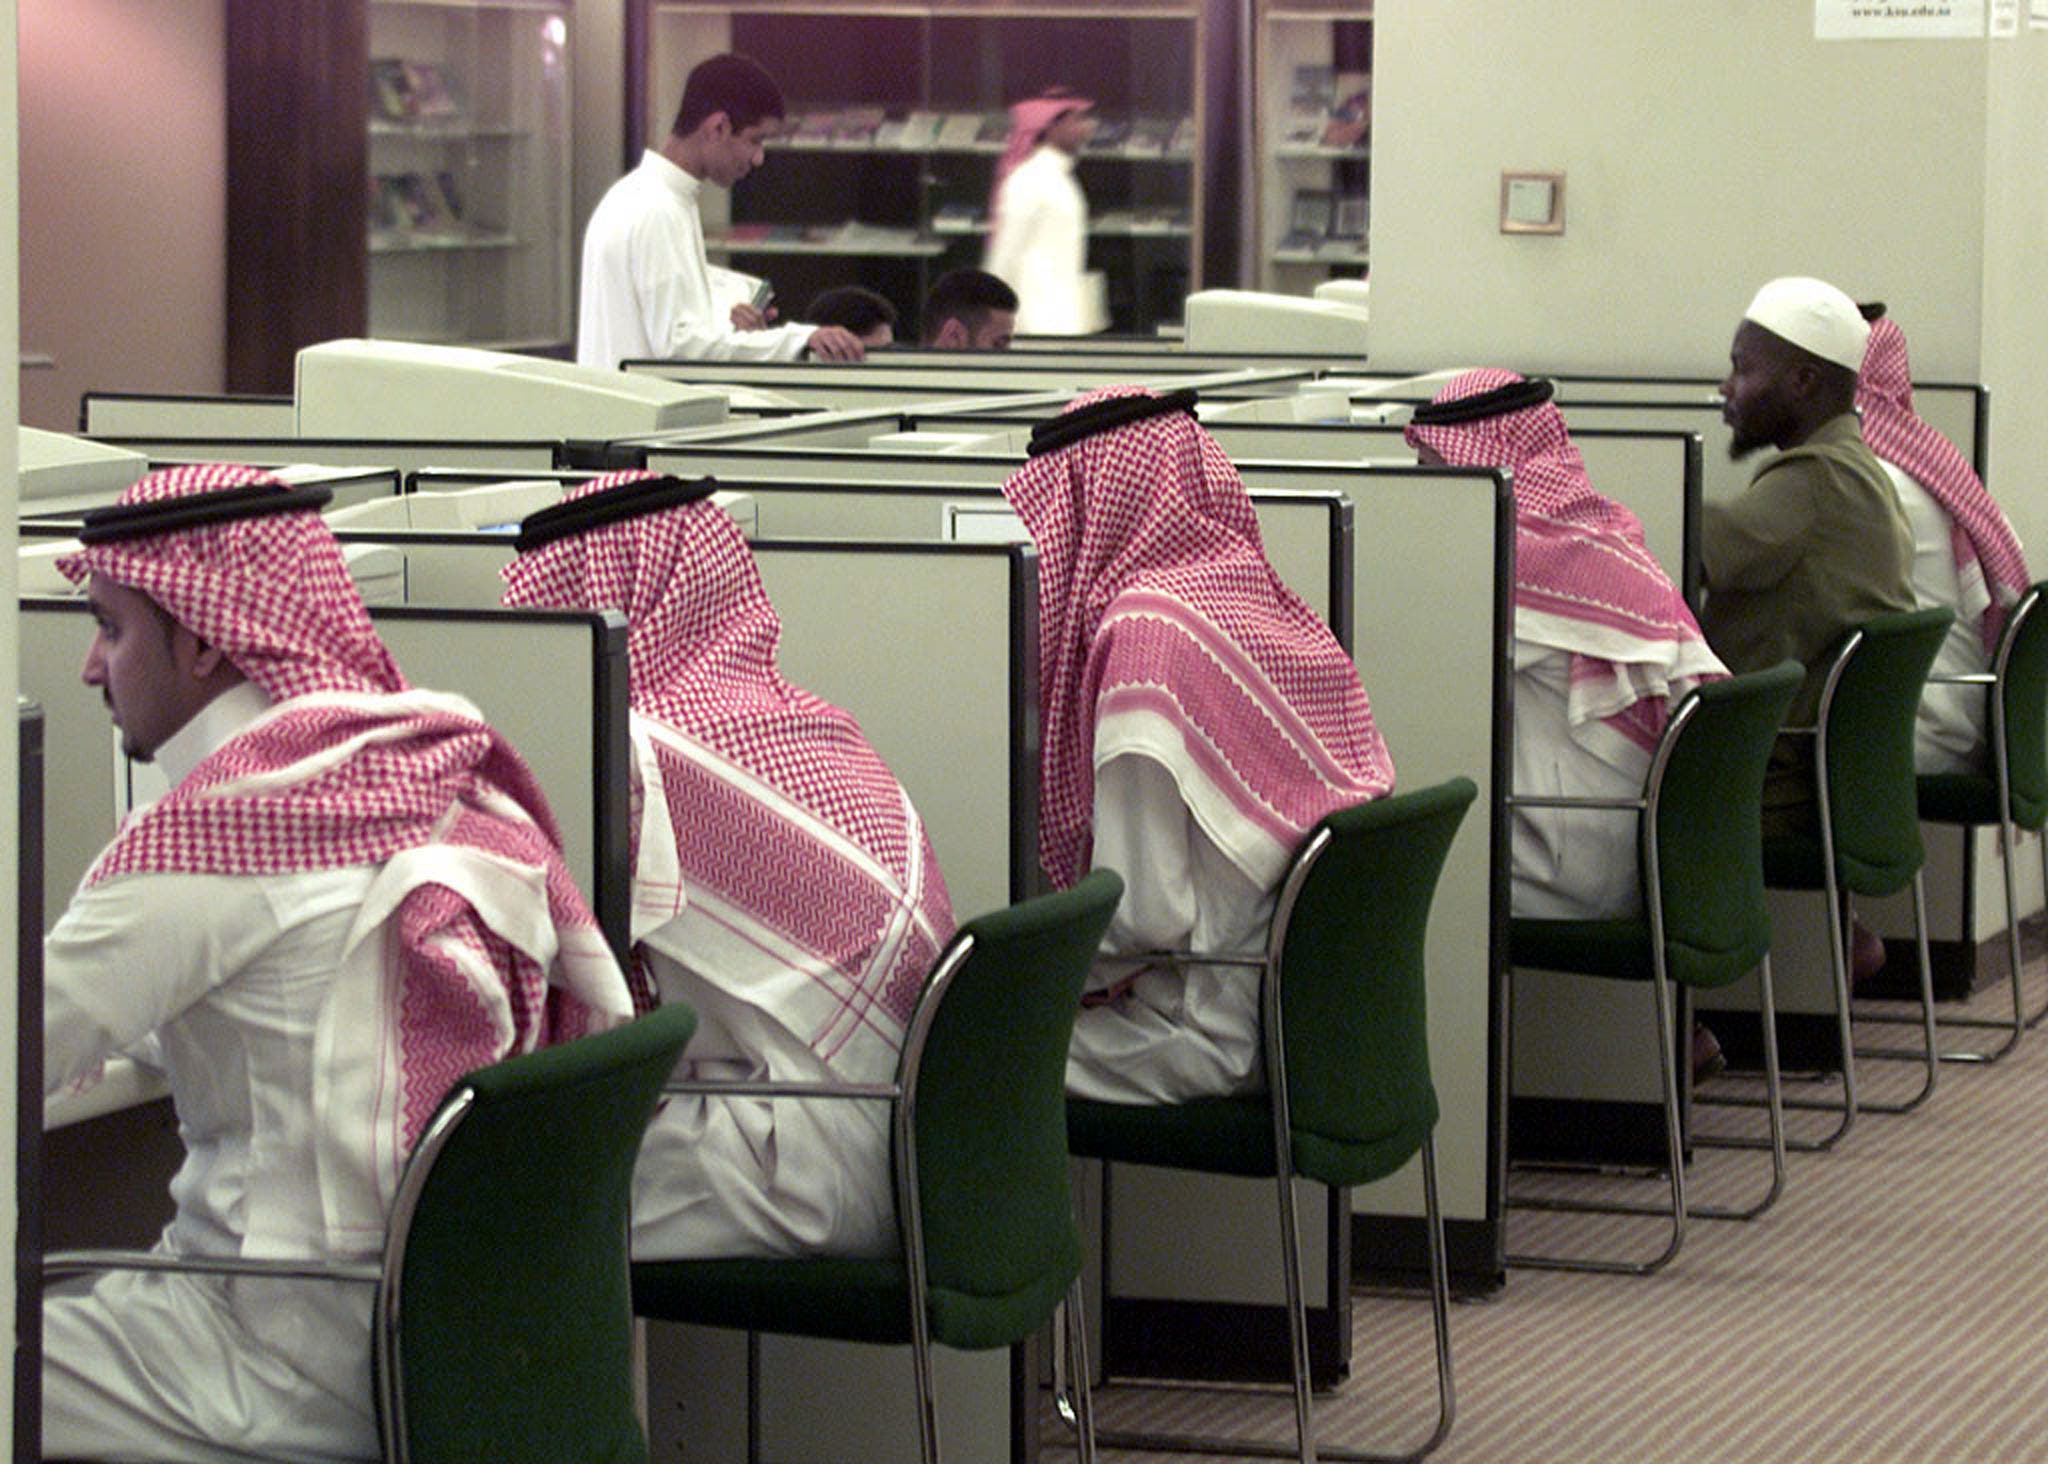 Saudi students attend a computer class at King Saud University in Riyadh, Saudi Arabia. (File photo: Reuters)